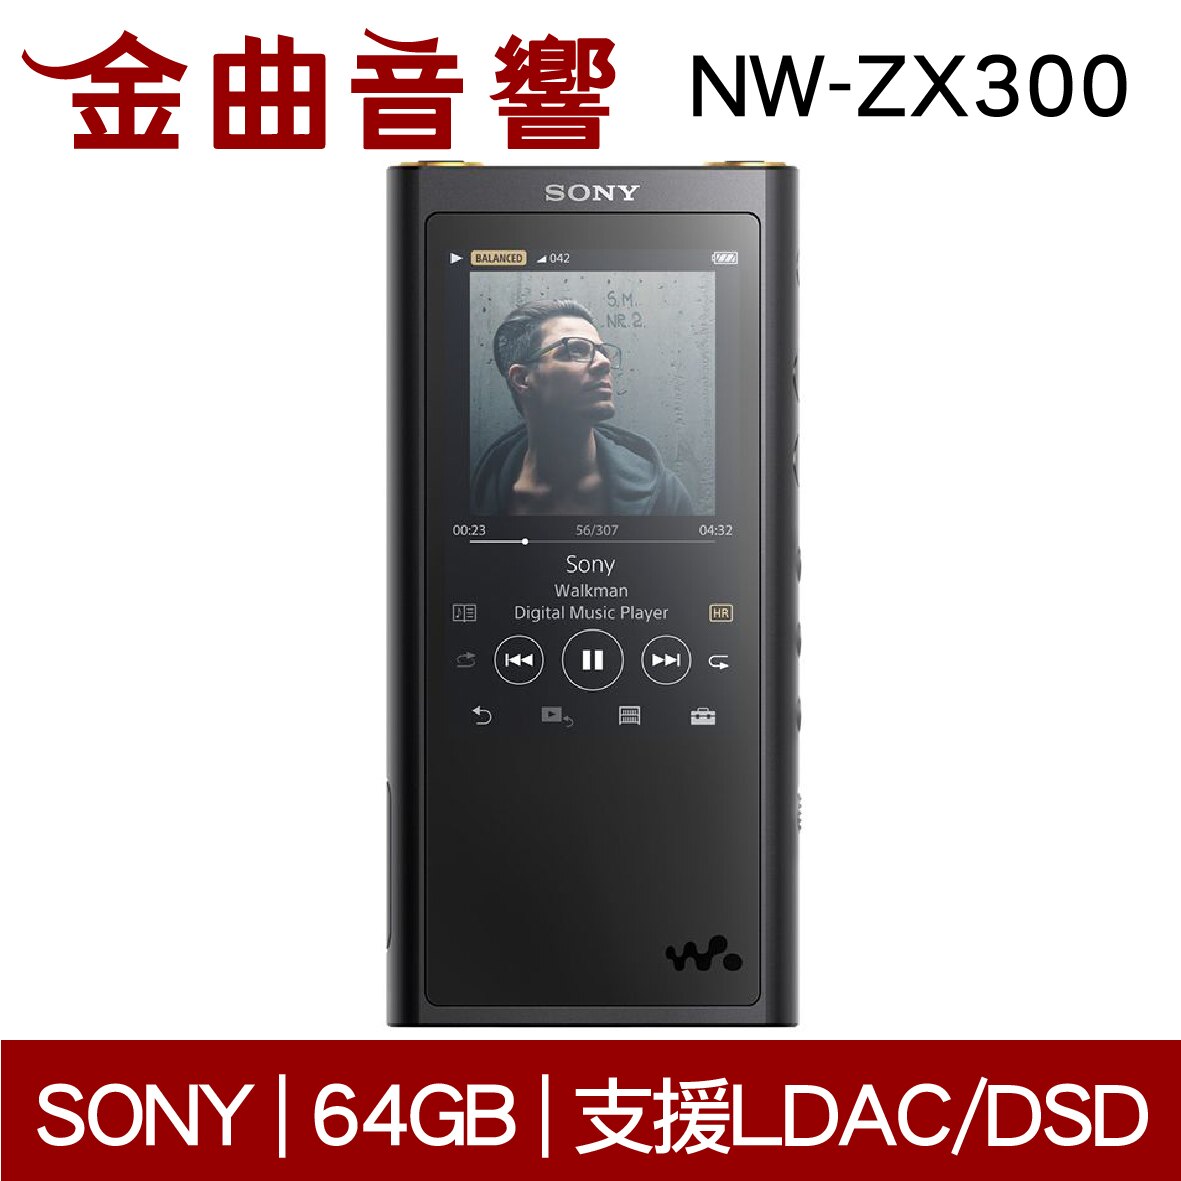 NW-ZX300 兩色可選 高解析 隨身 數位 播放器 64GB